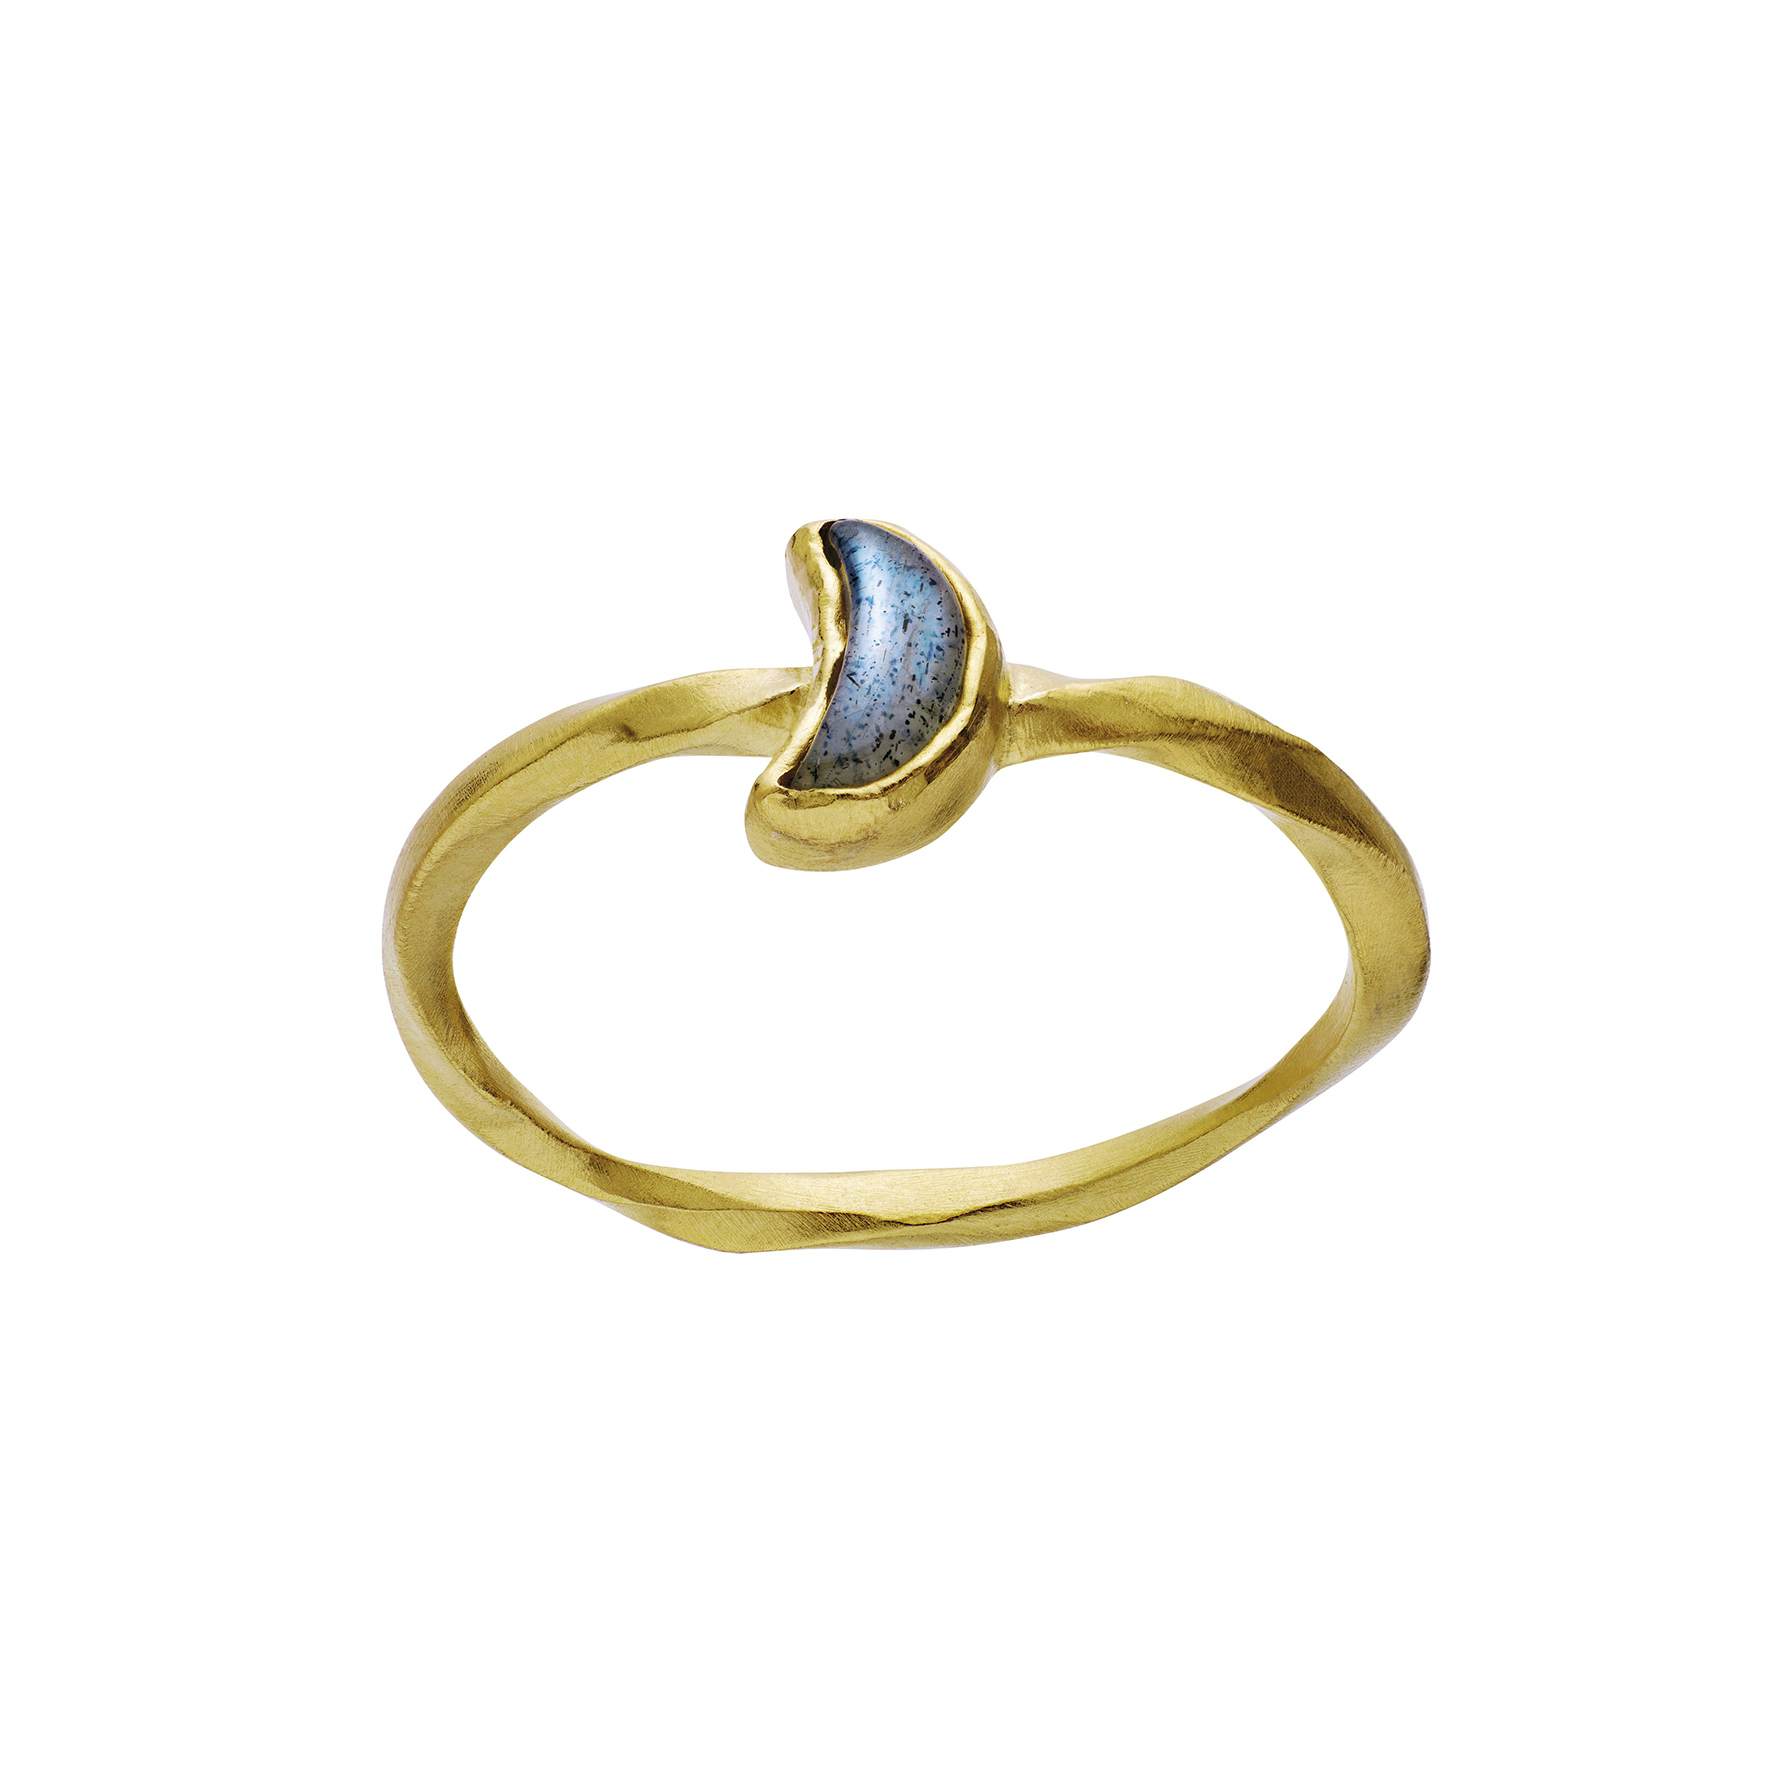 Doris Ring from Maanesten in Goldplated-Silver Sterling 925